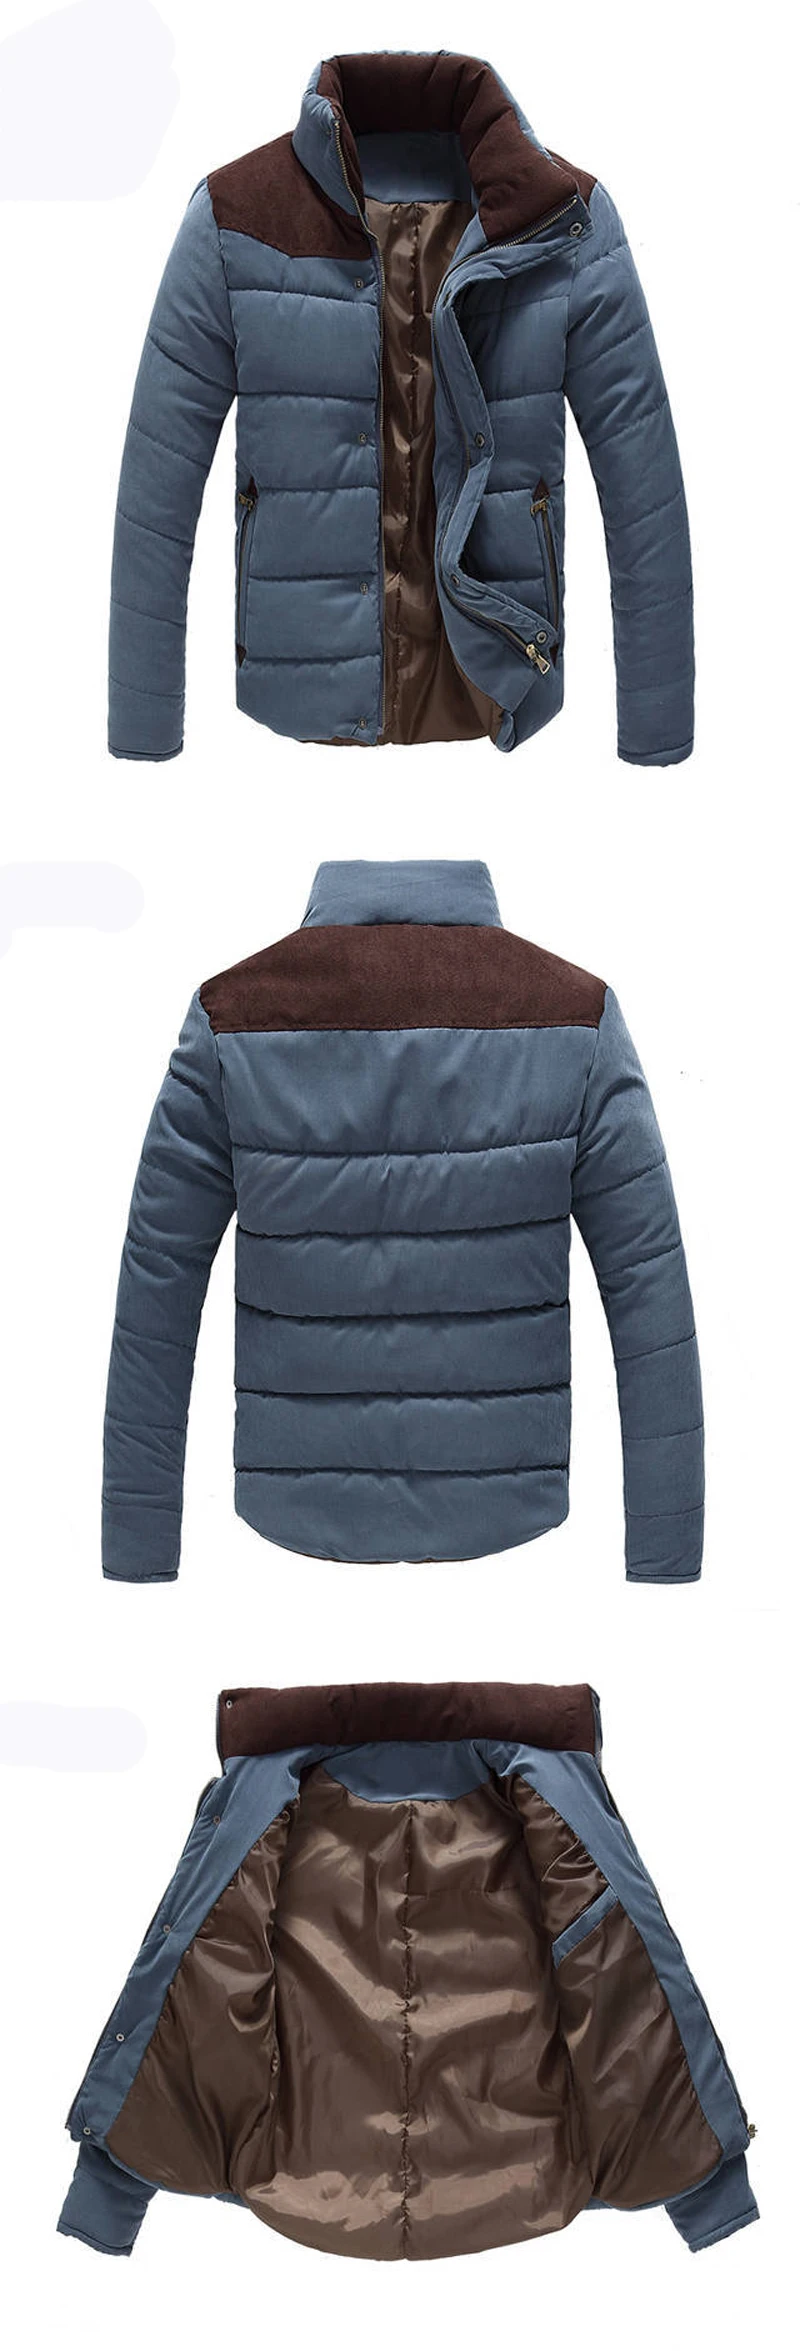 Горячая Распродажа Мужская мода Повседневная зимняя верхняя одежда пальто удобная куртка два цвета размера плюс XXXL MWM169